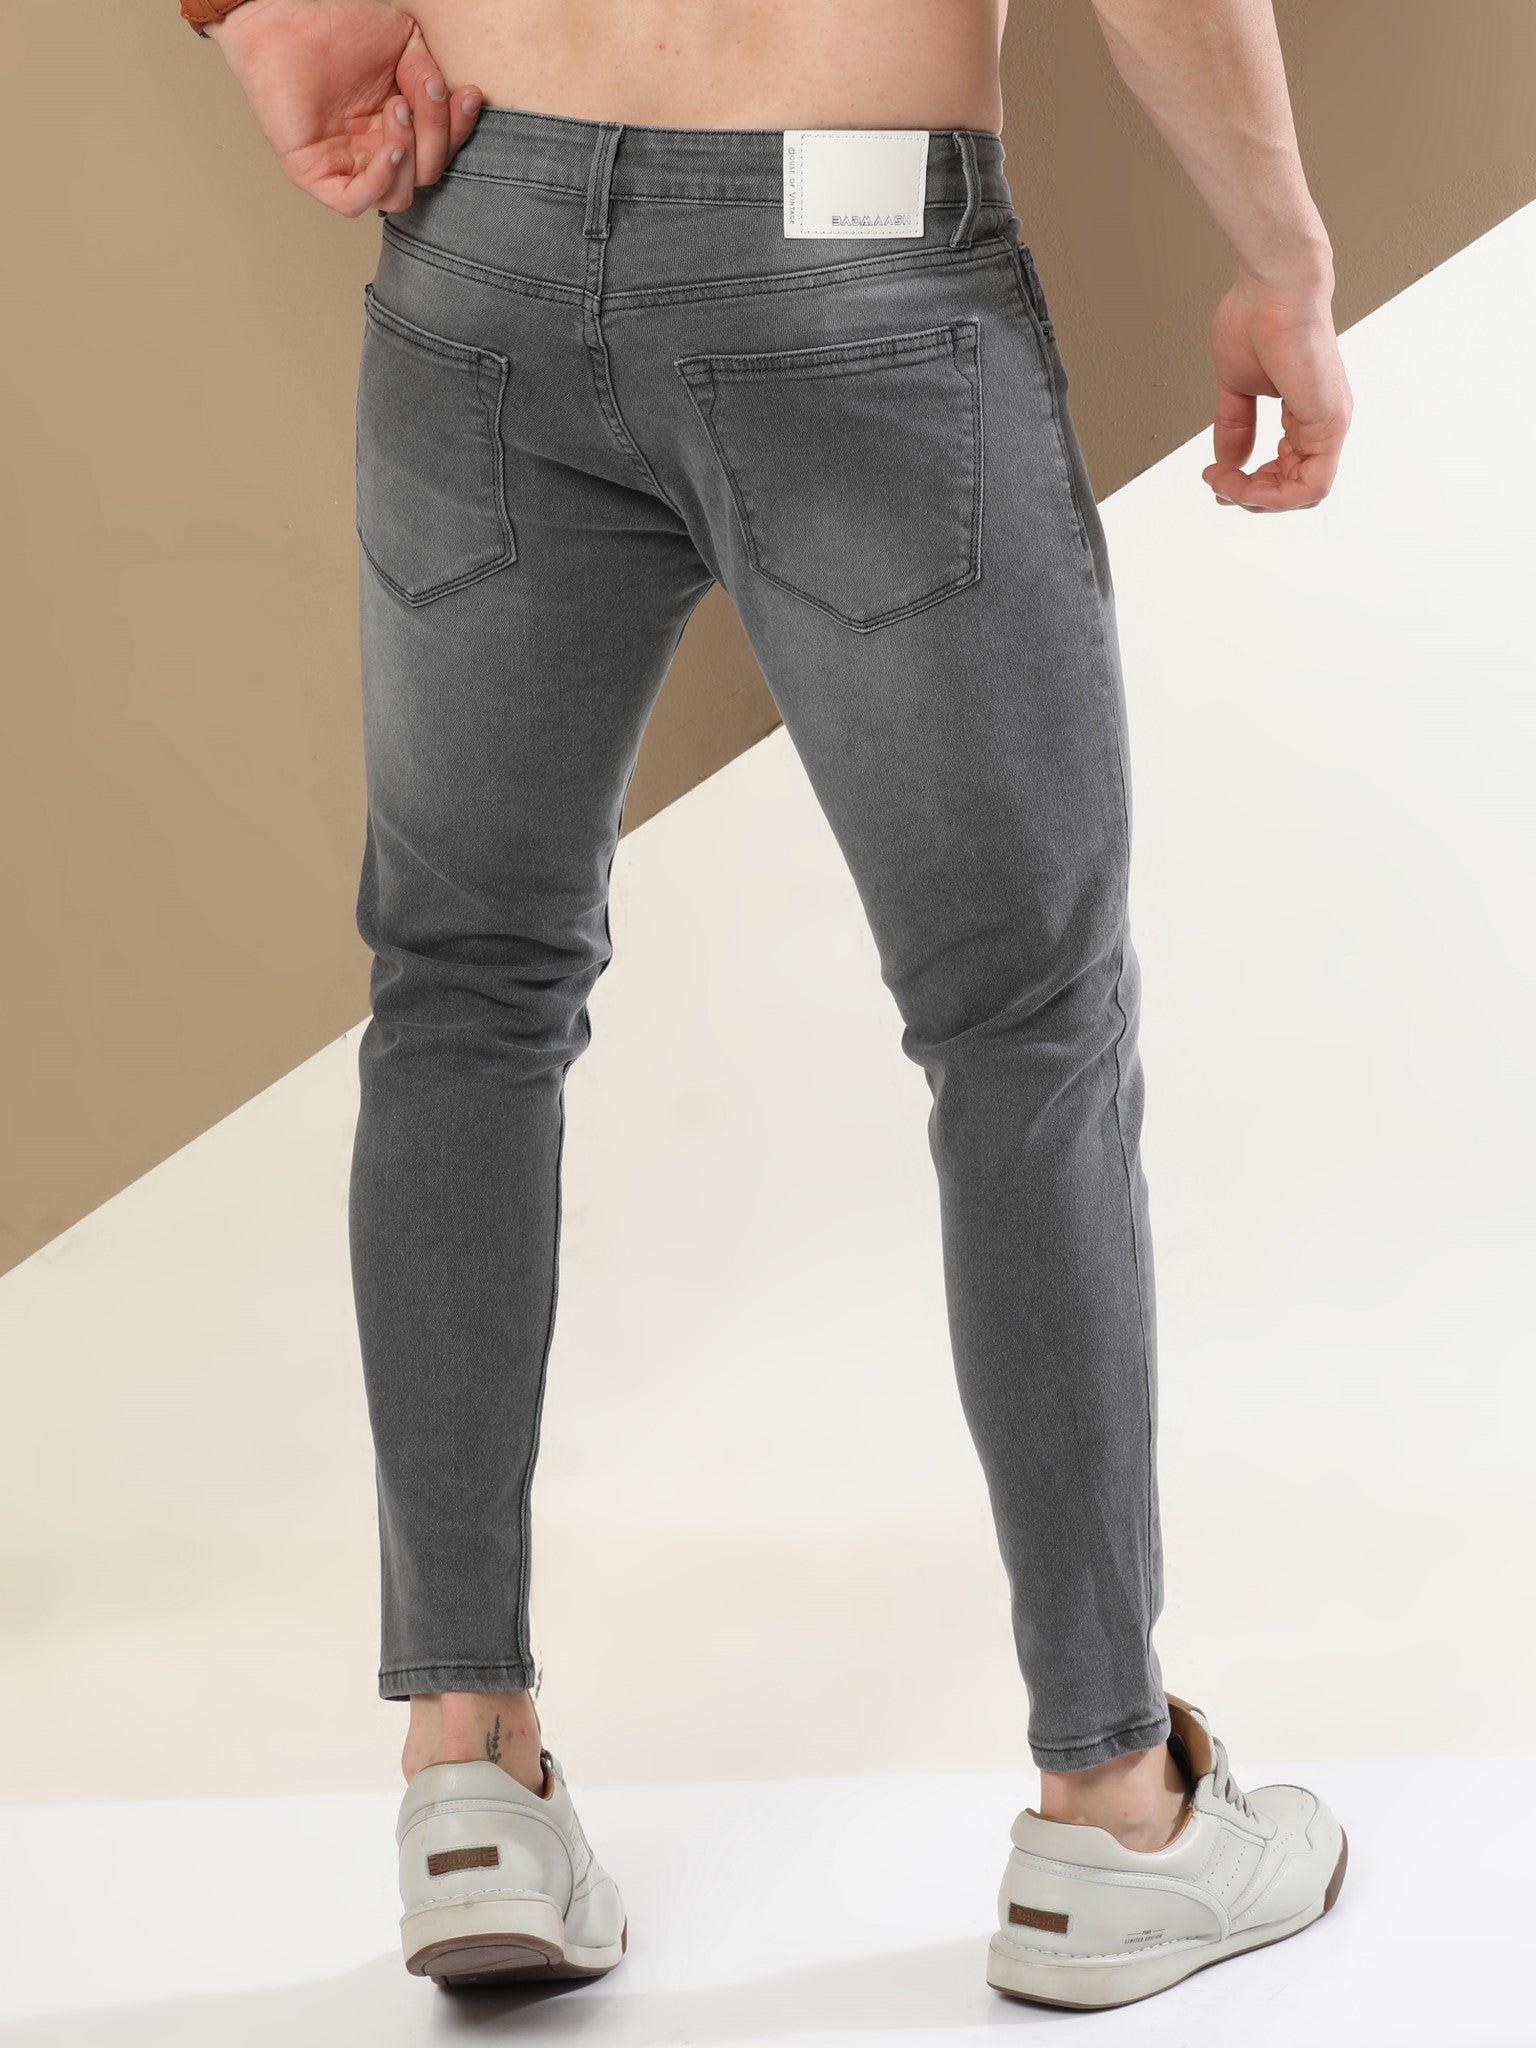 Stunning Gray Skinny Jeans